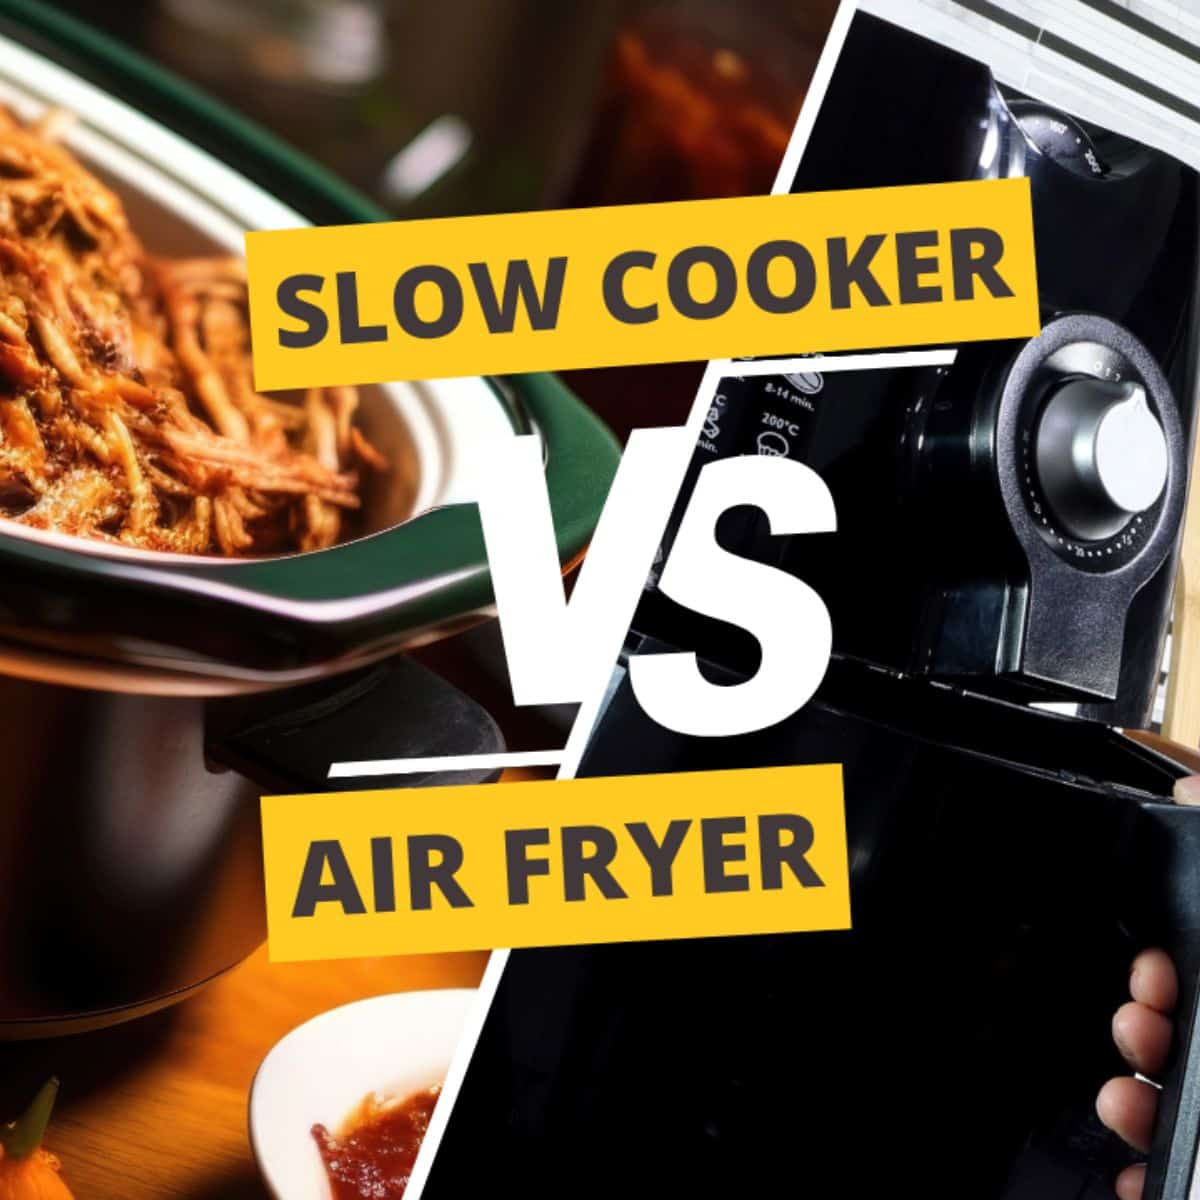 slow cooker vs air fryer vs collage